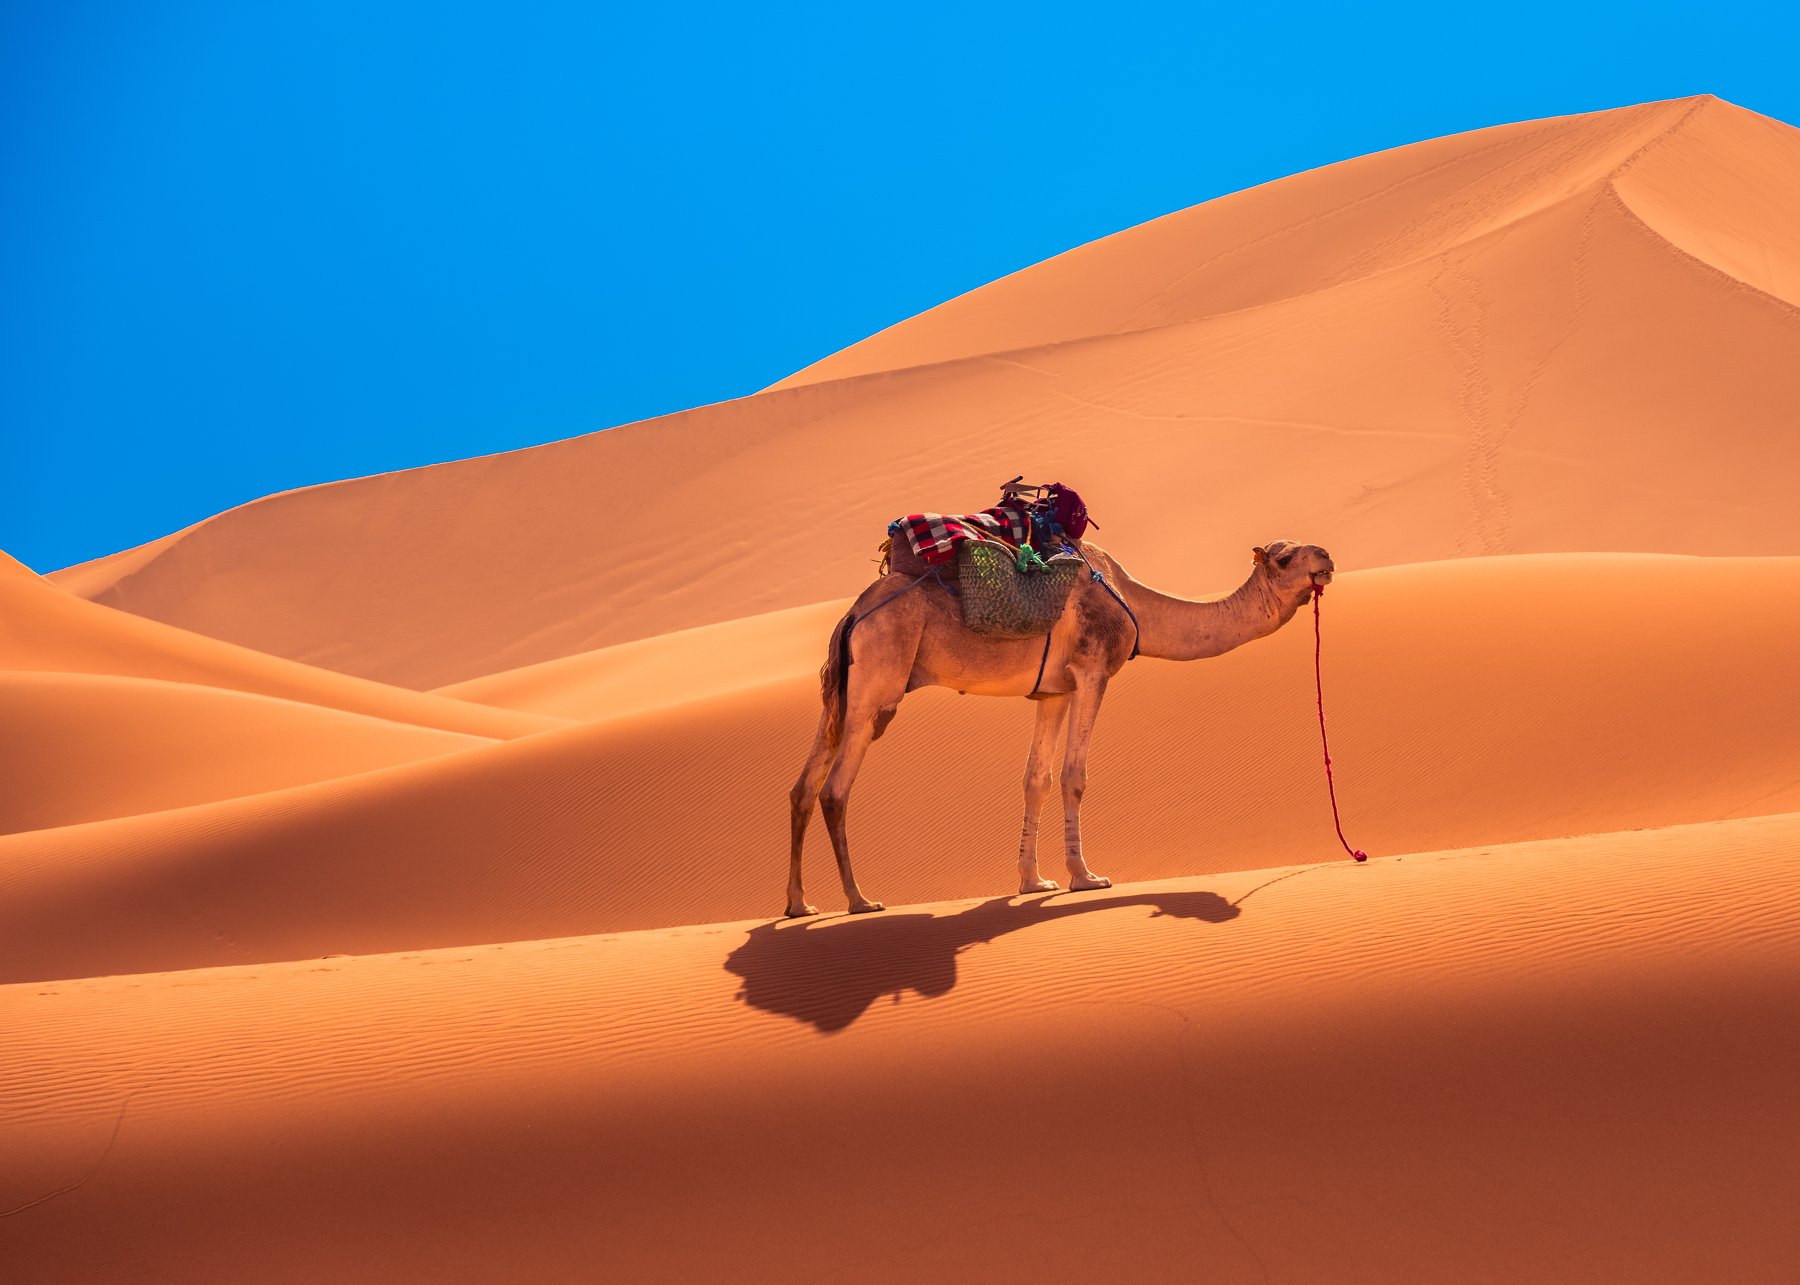 Camel, Sahara, Maroc, Sand, Prybinski Miroslaw